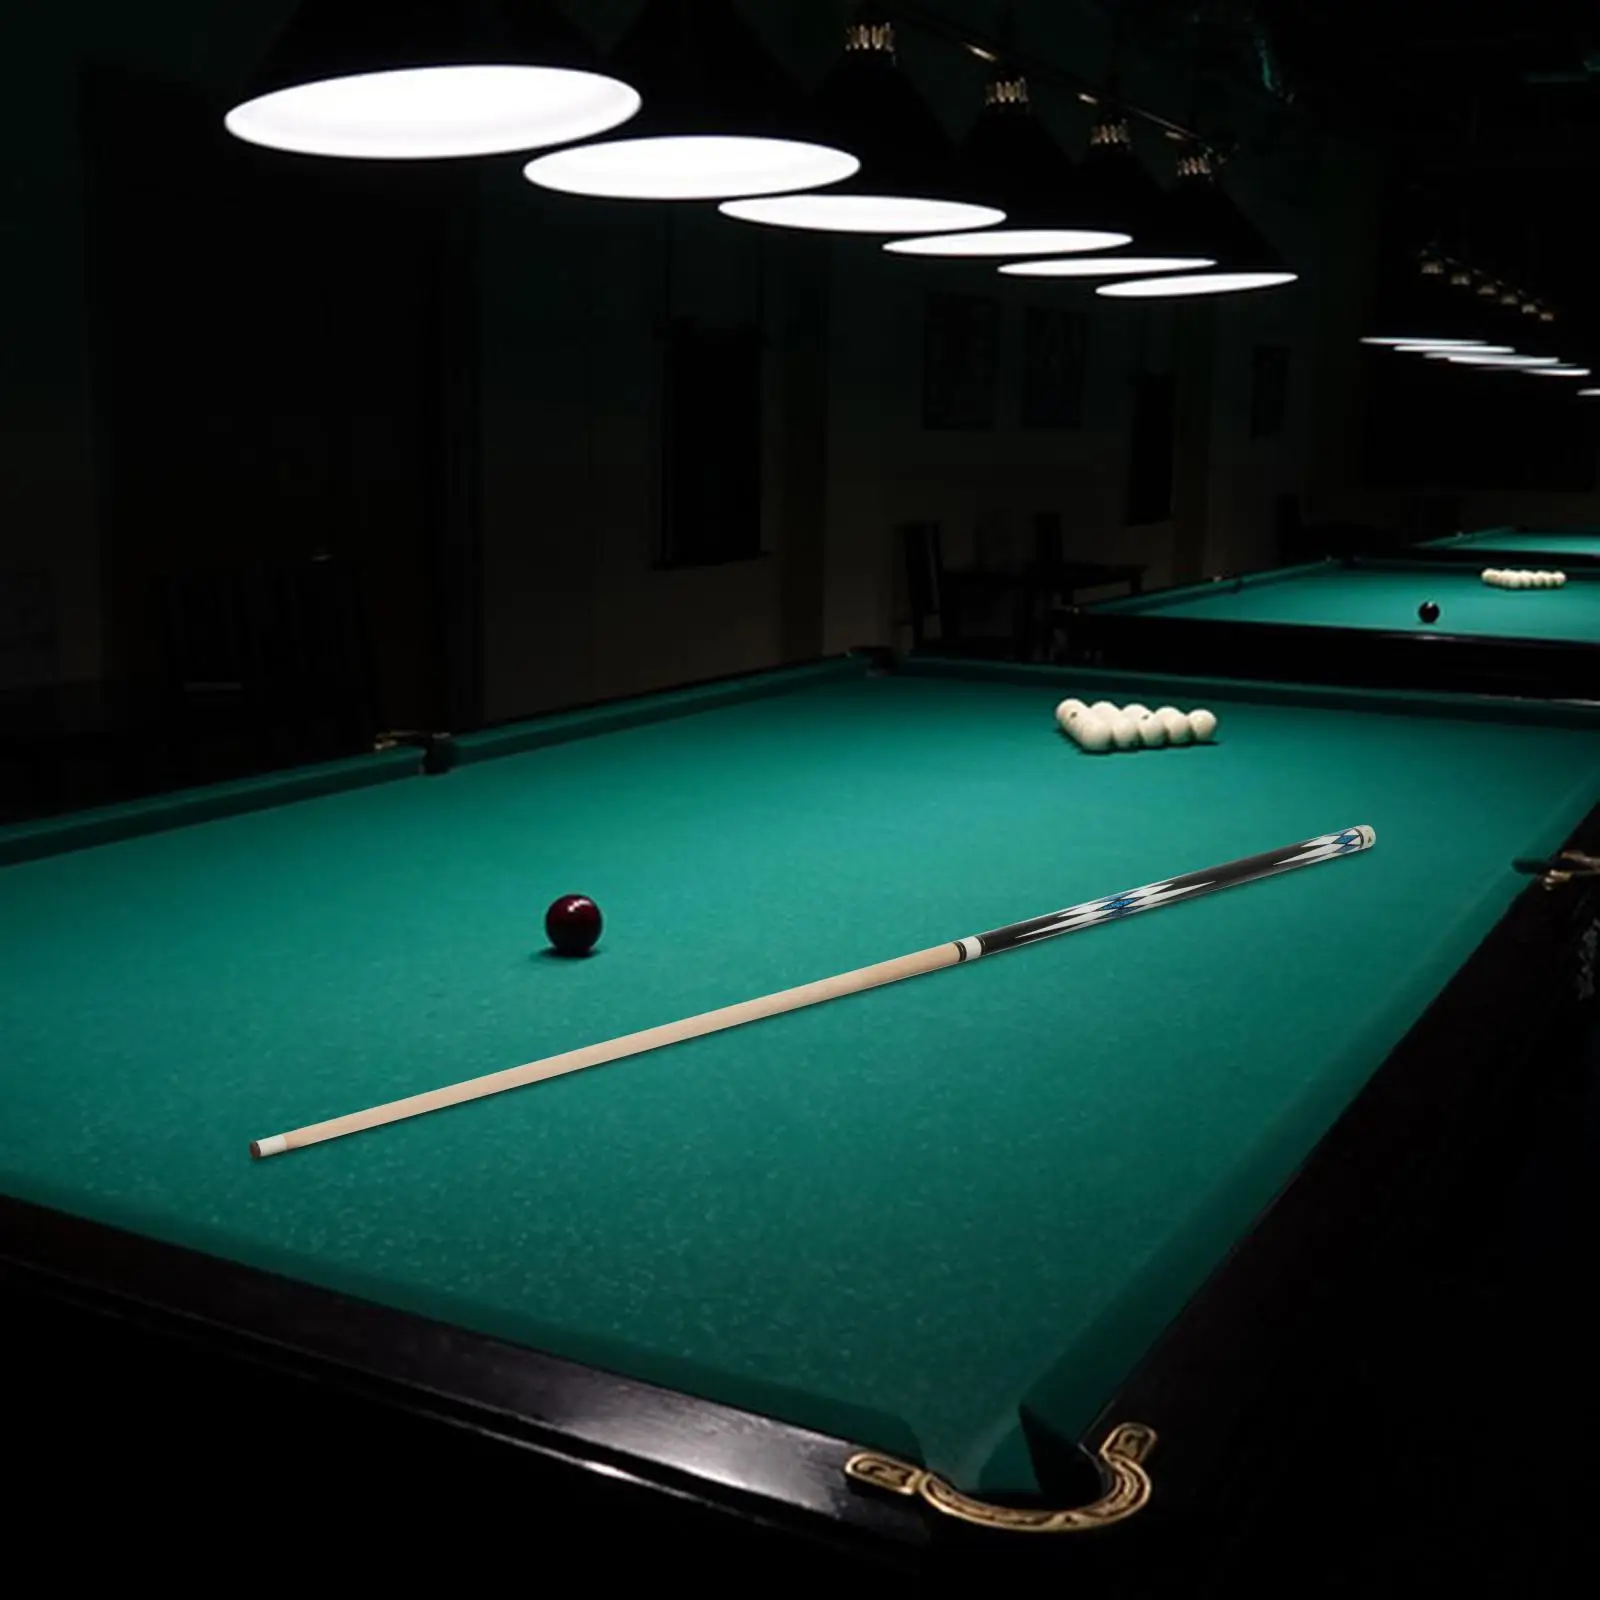 Pool Cue 57 inch Billiard Pool Stick for Billiard Players Adult Men Women